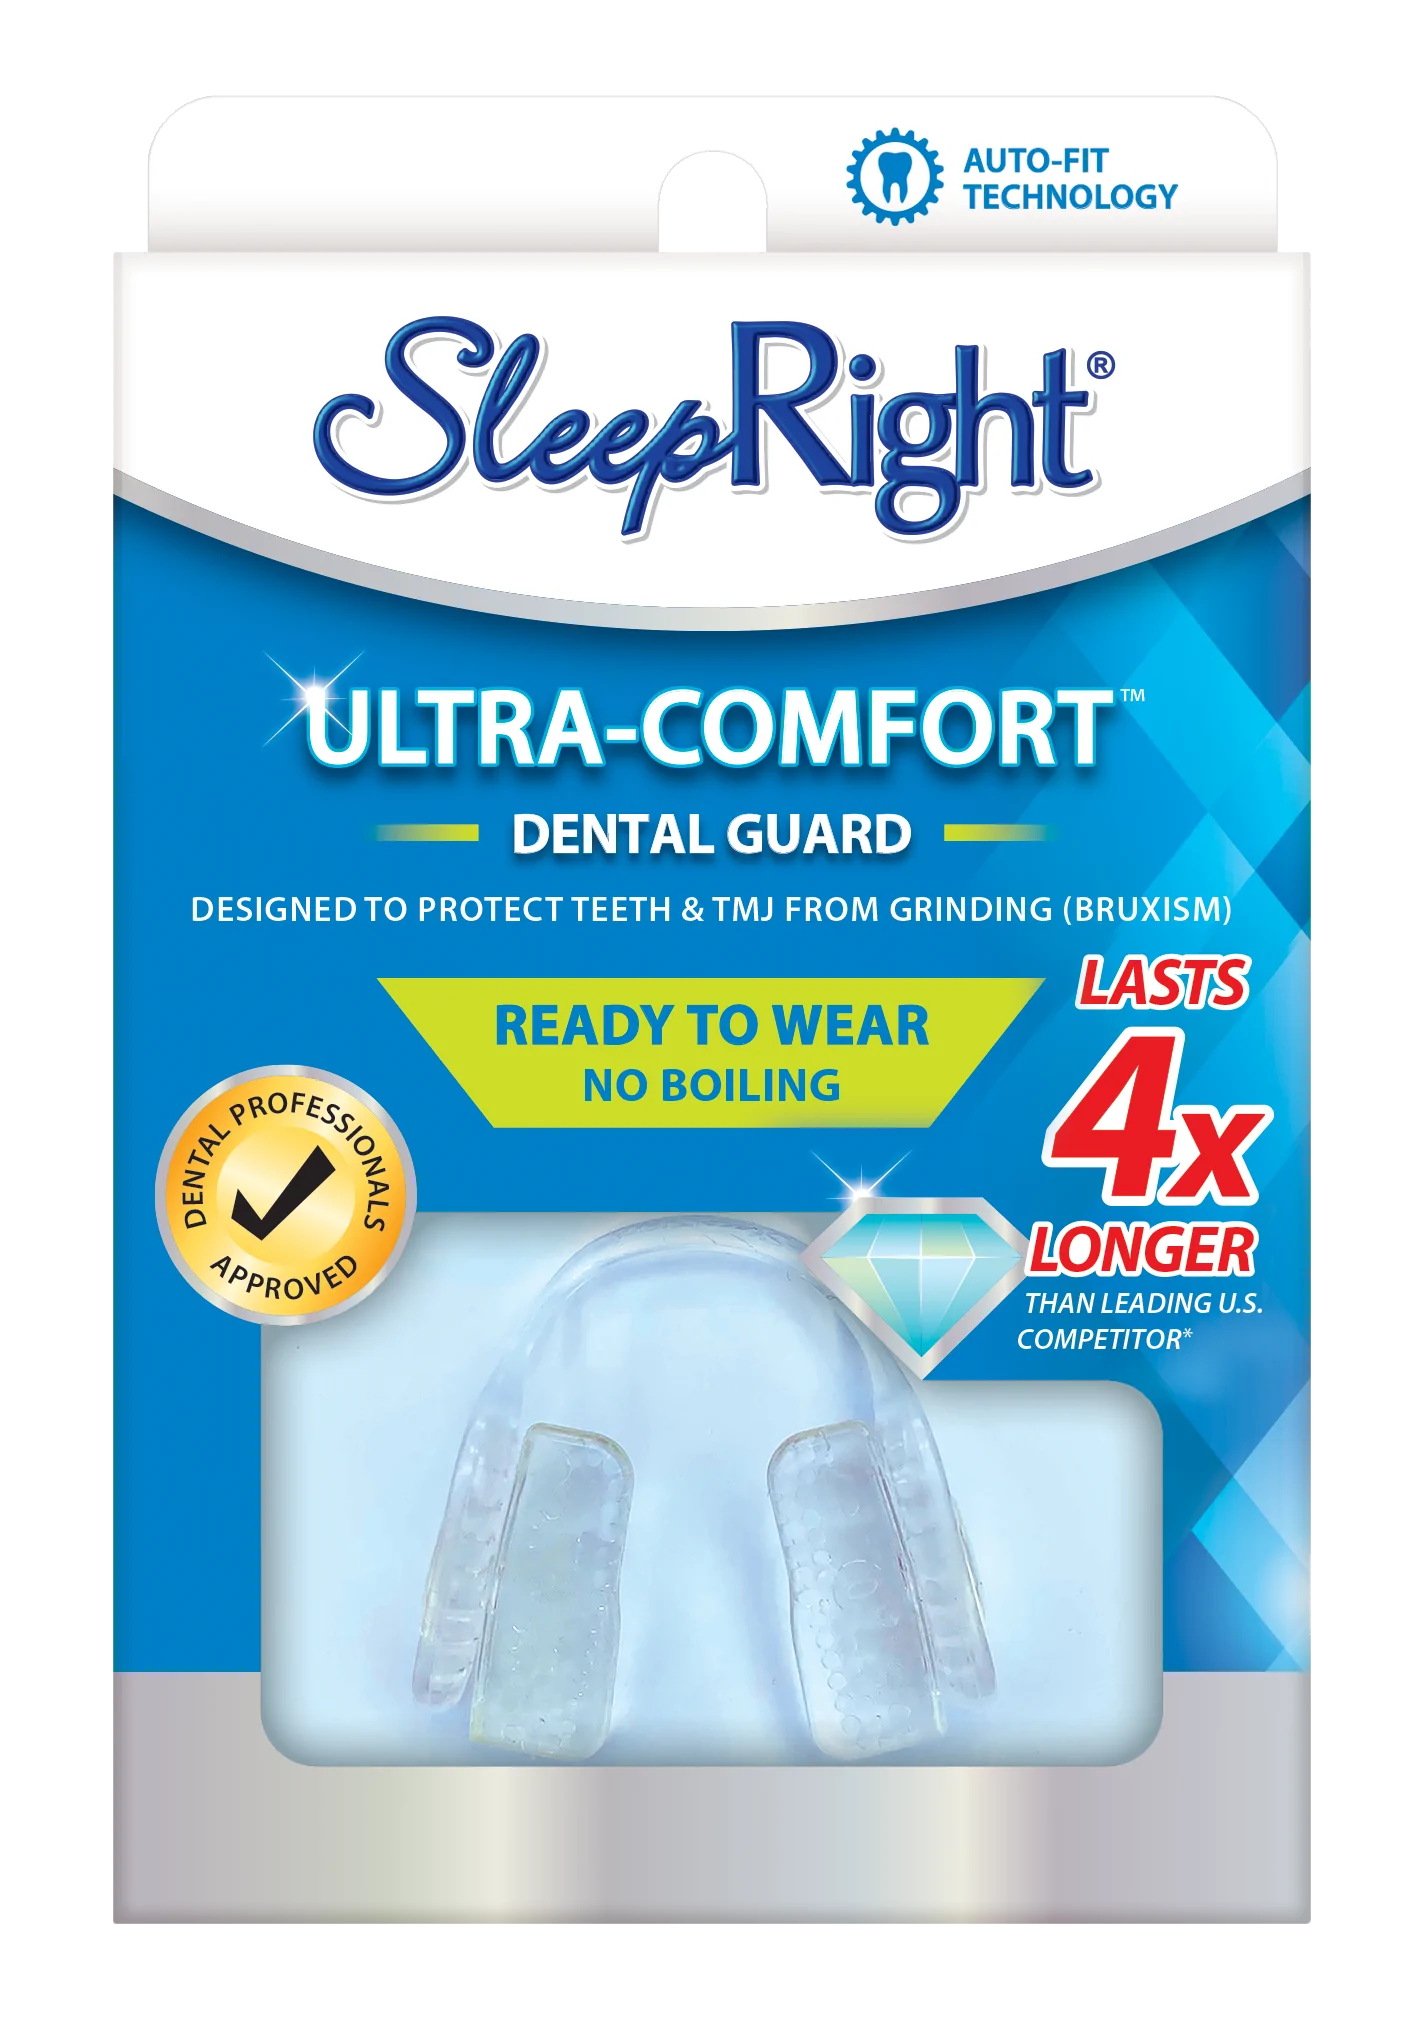 Ultra Comfort Dental Guard - Sleepright